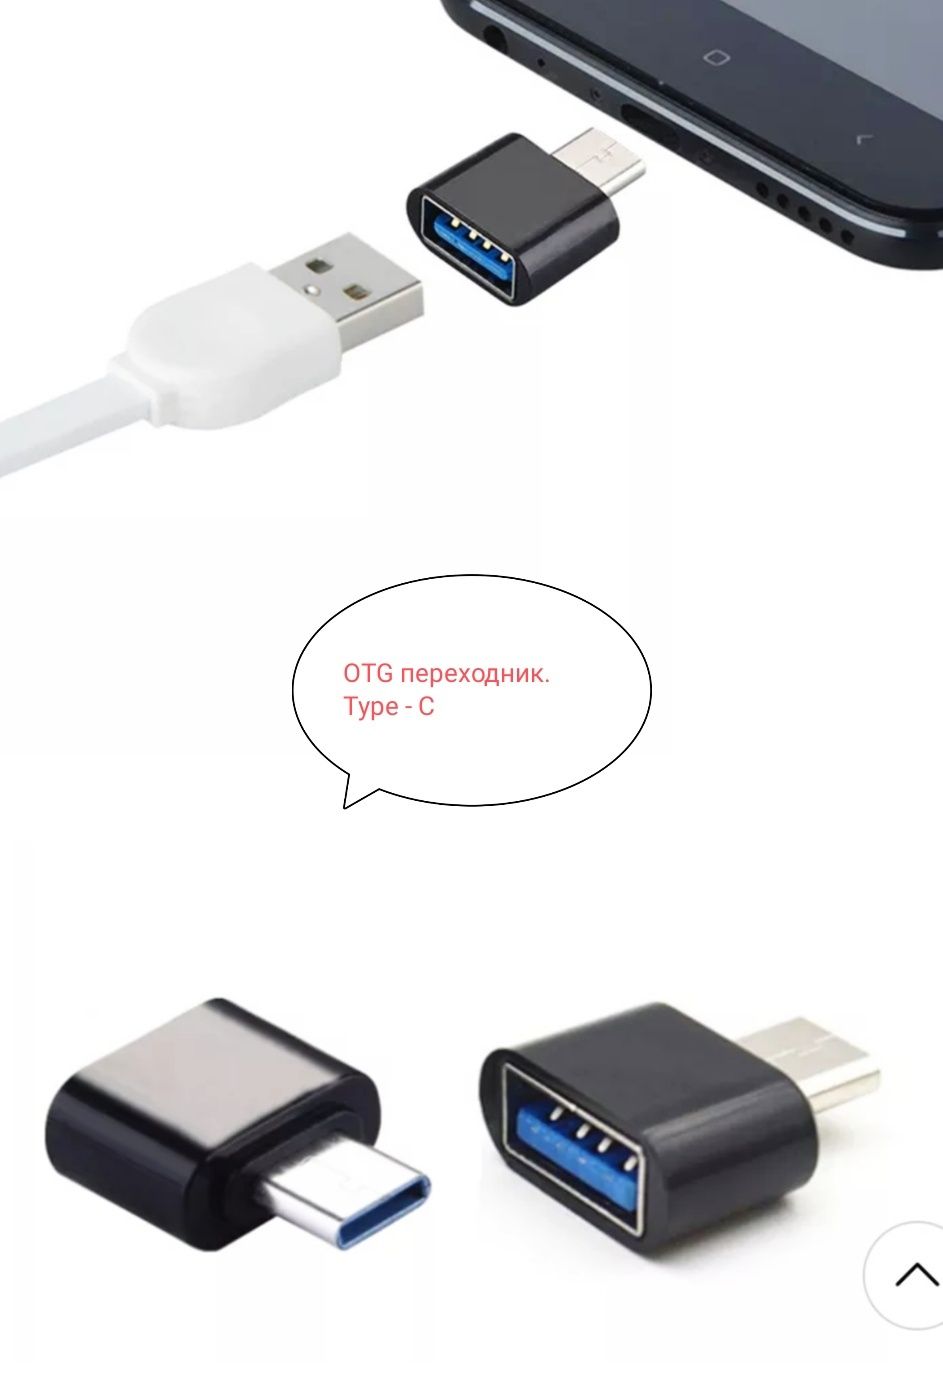 OTG  type  и микро переходники  адаптер для Android USB

OTG  type c п